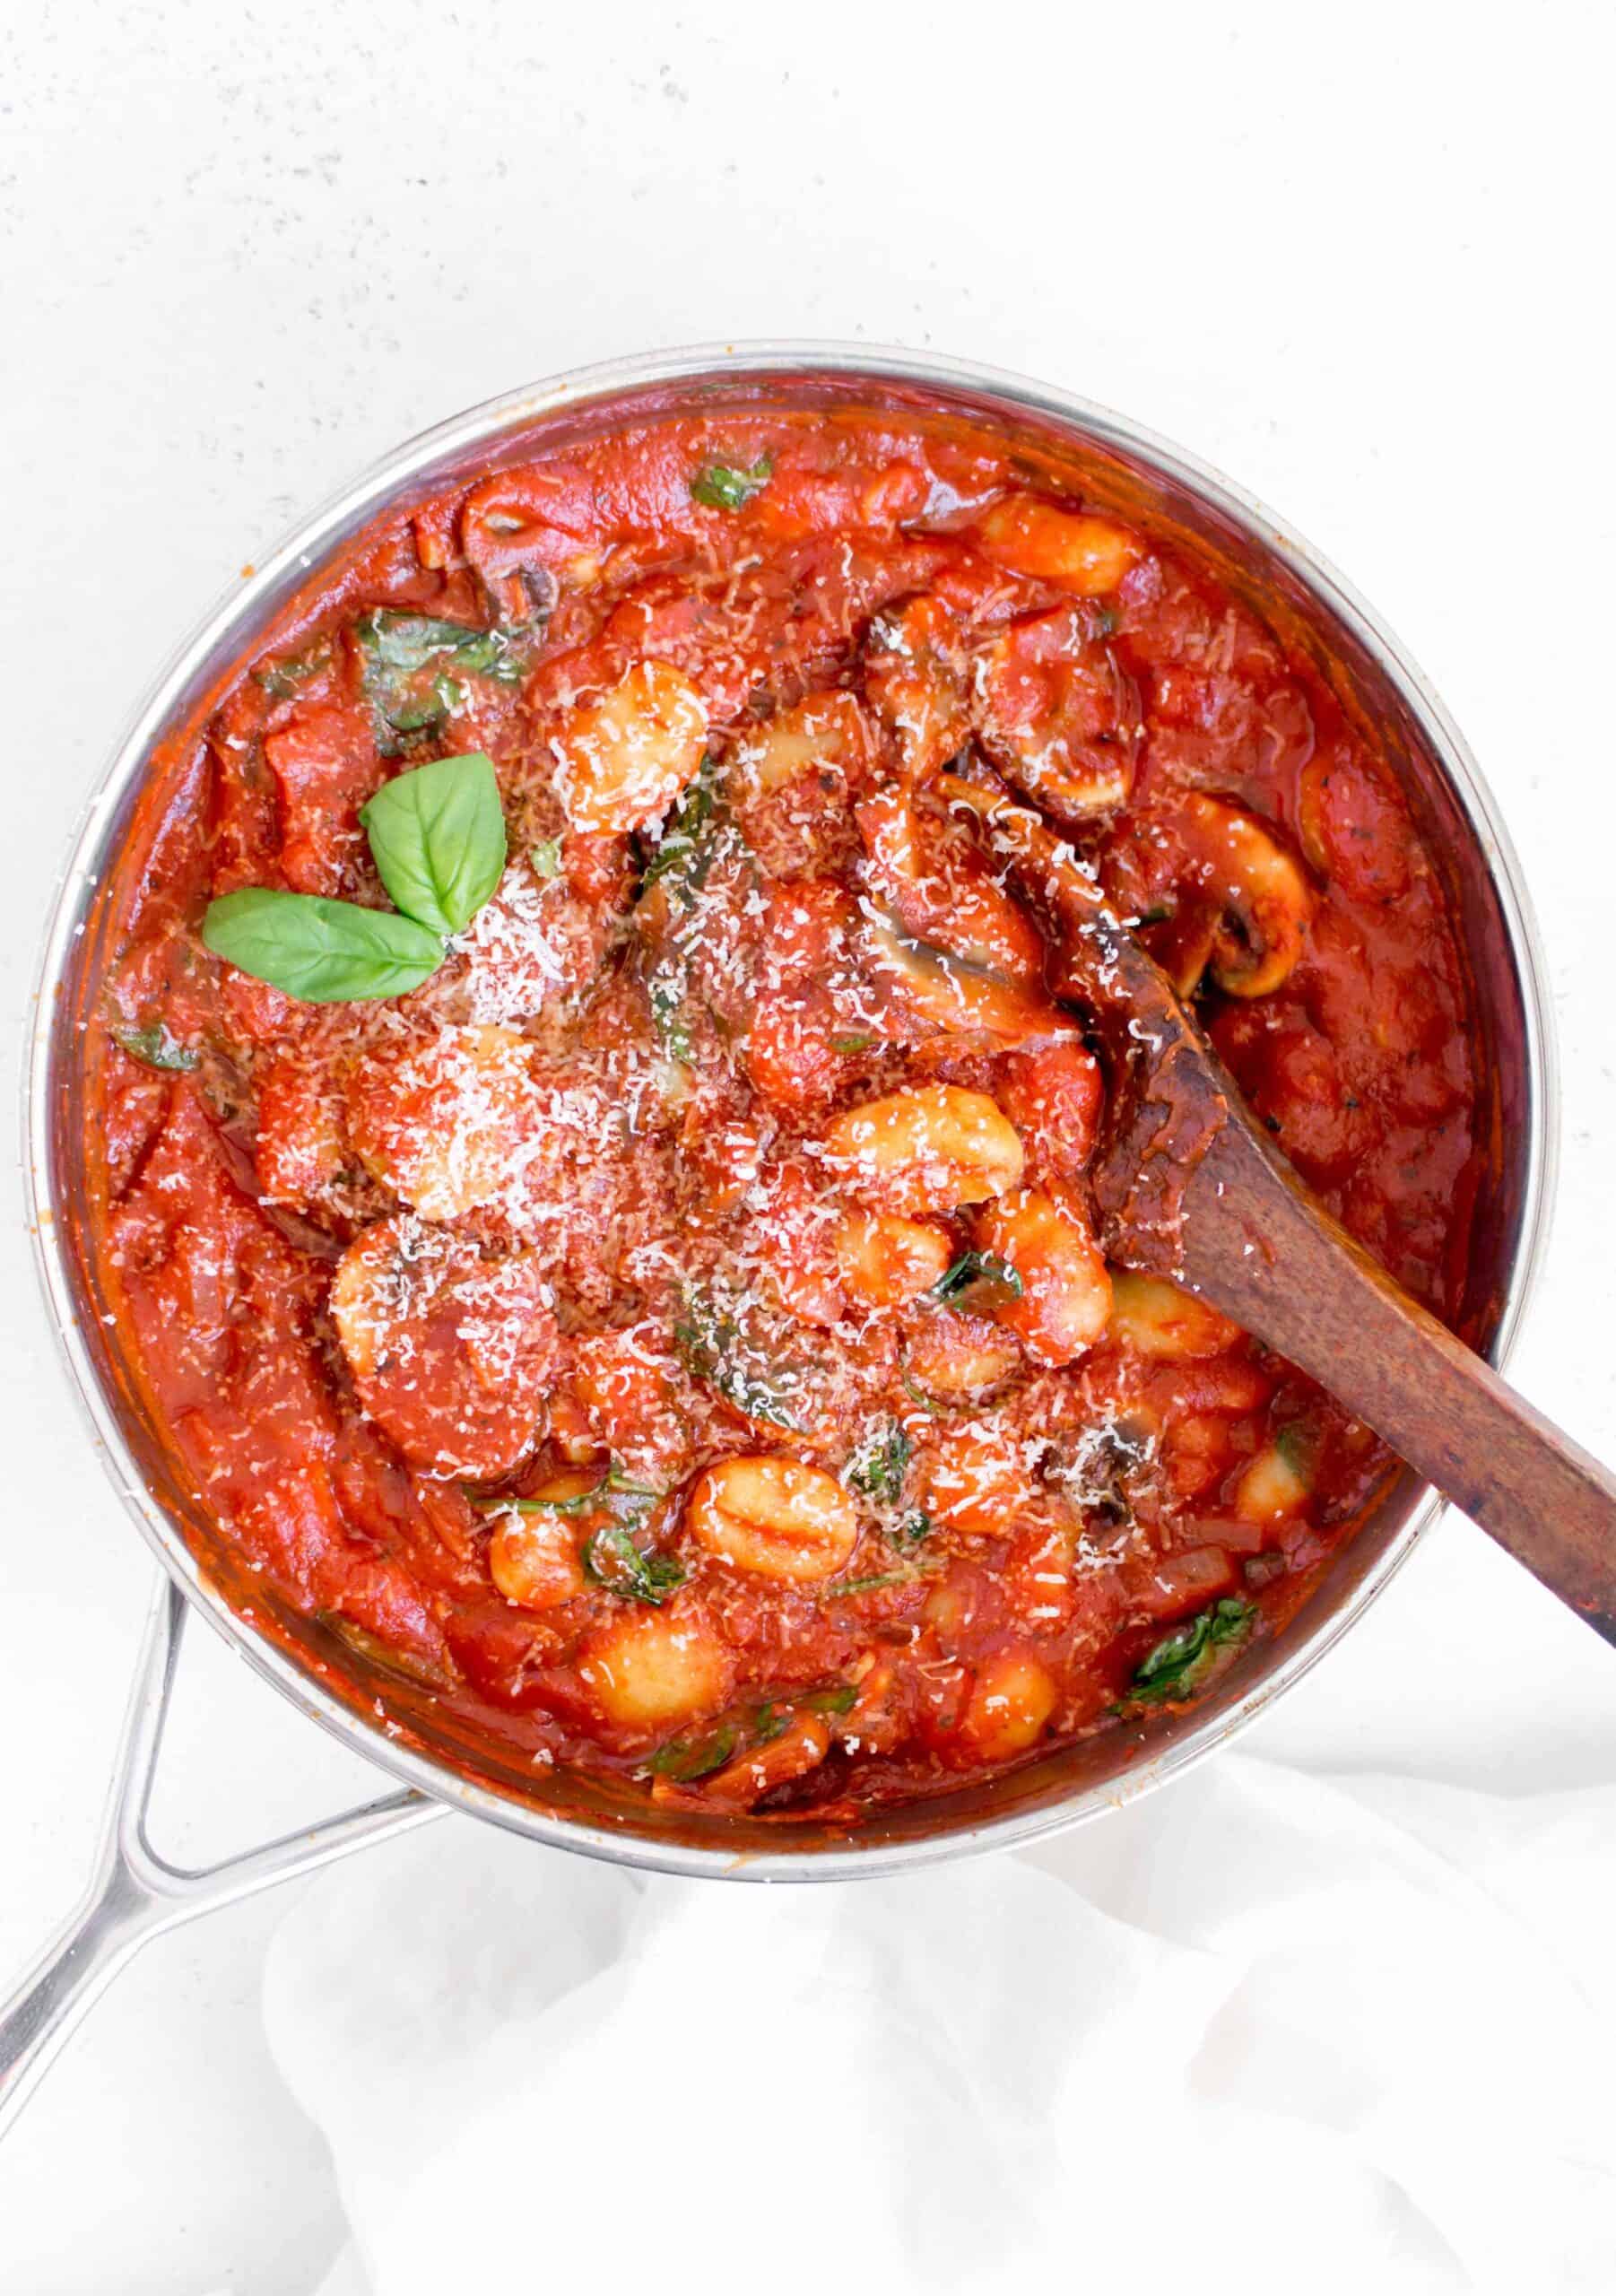 Gnocchi in Tomato Sauce with Mushrooms